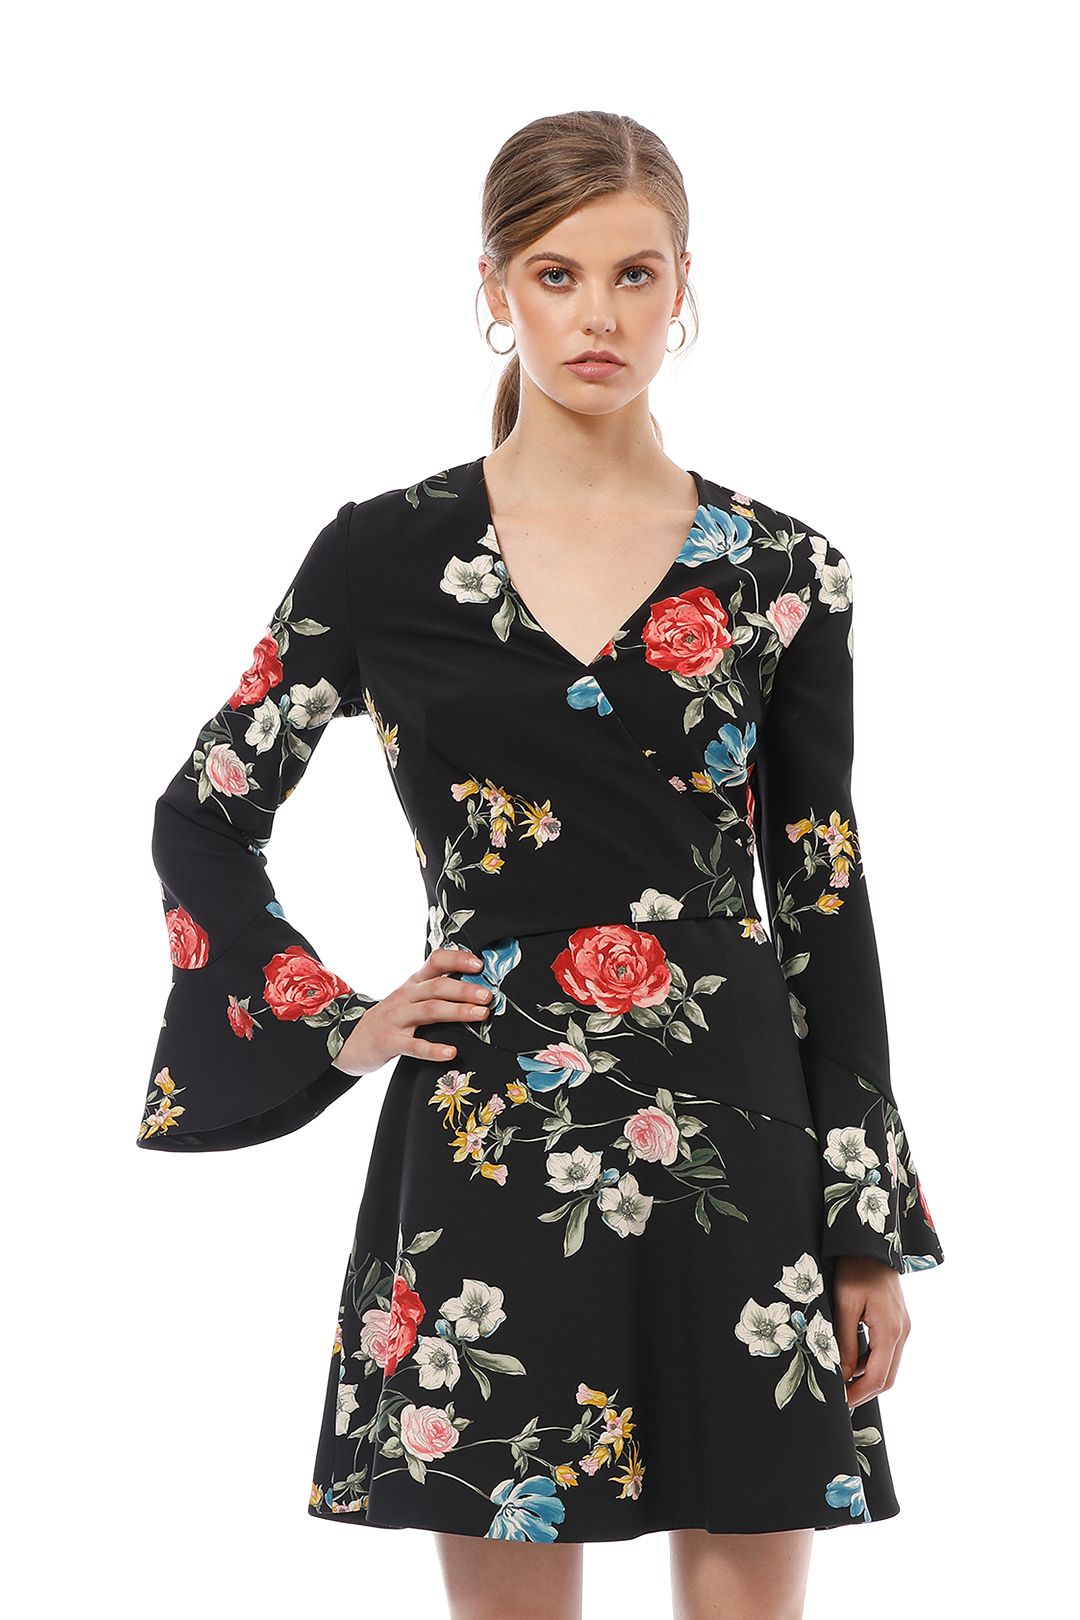 Cue - Watercolour Rose Long Sleeve Dress - Black Floral - Close Up